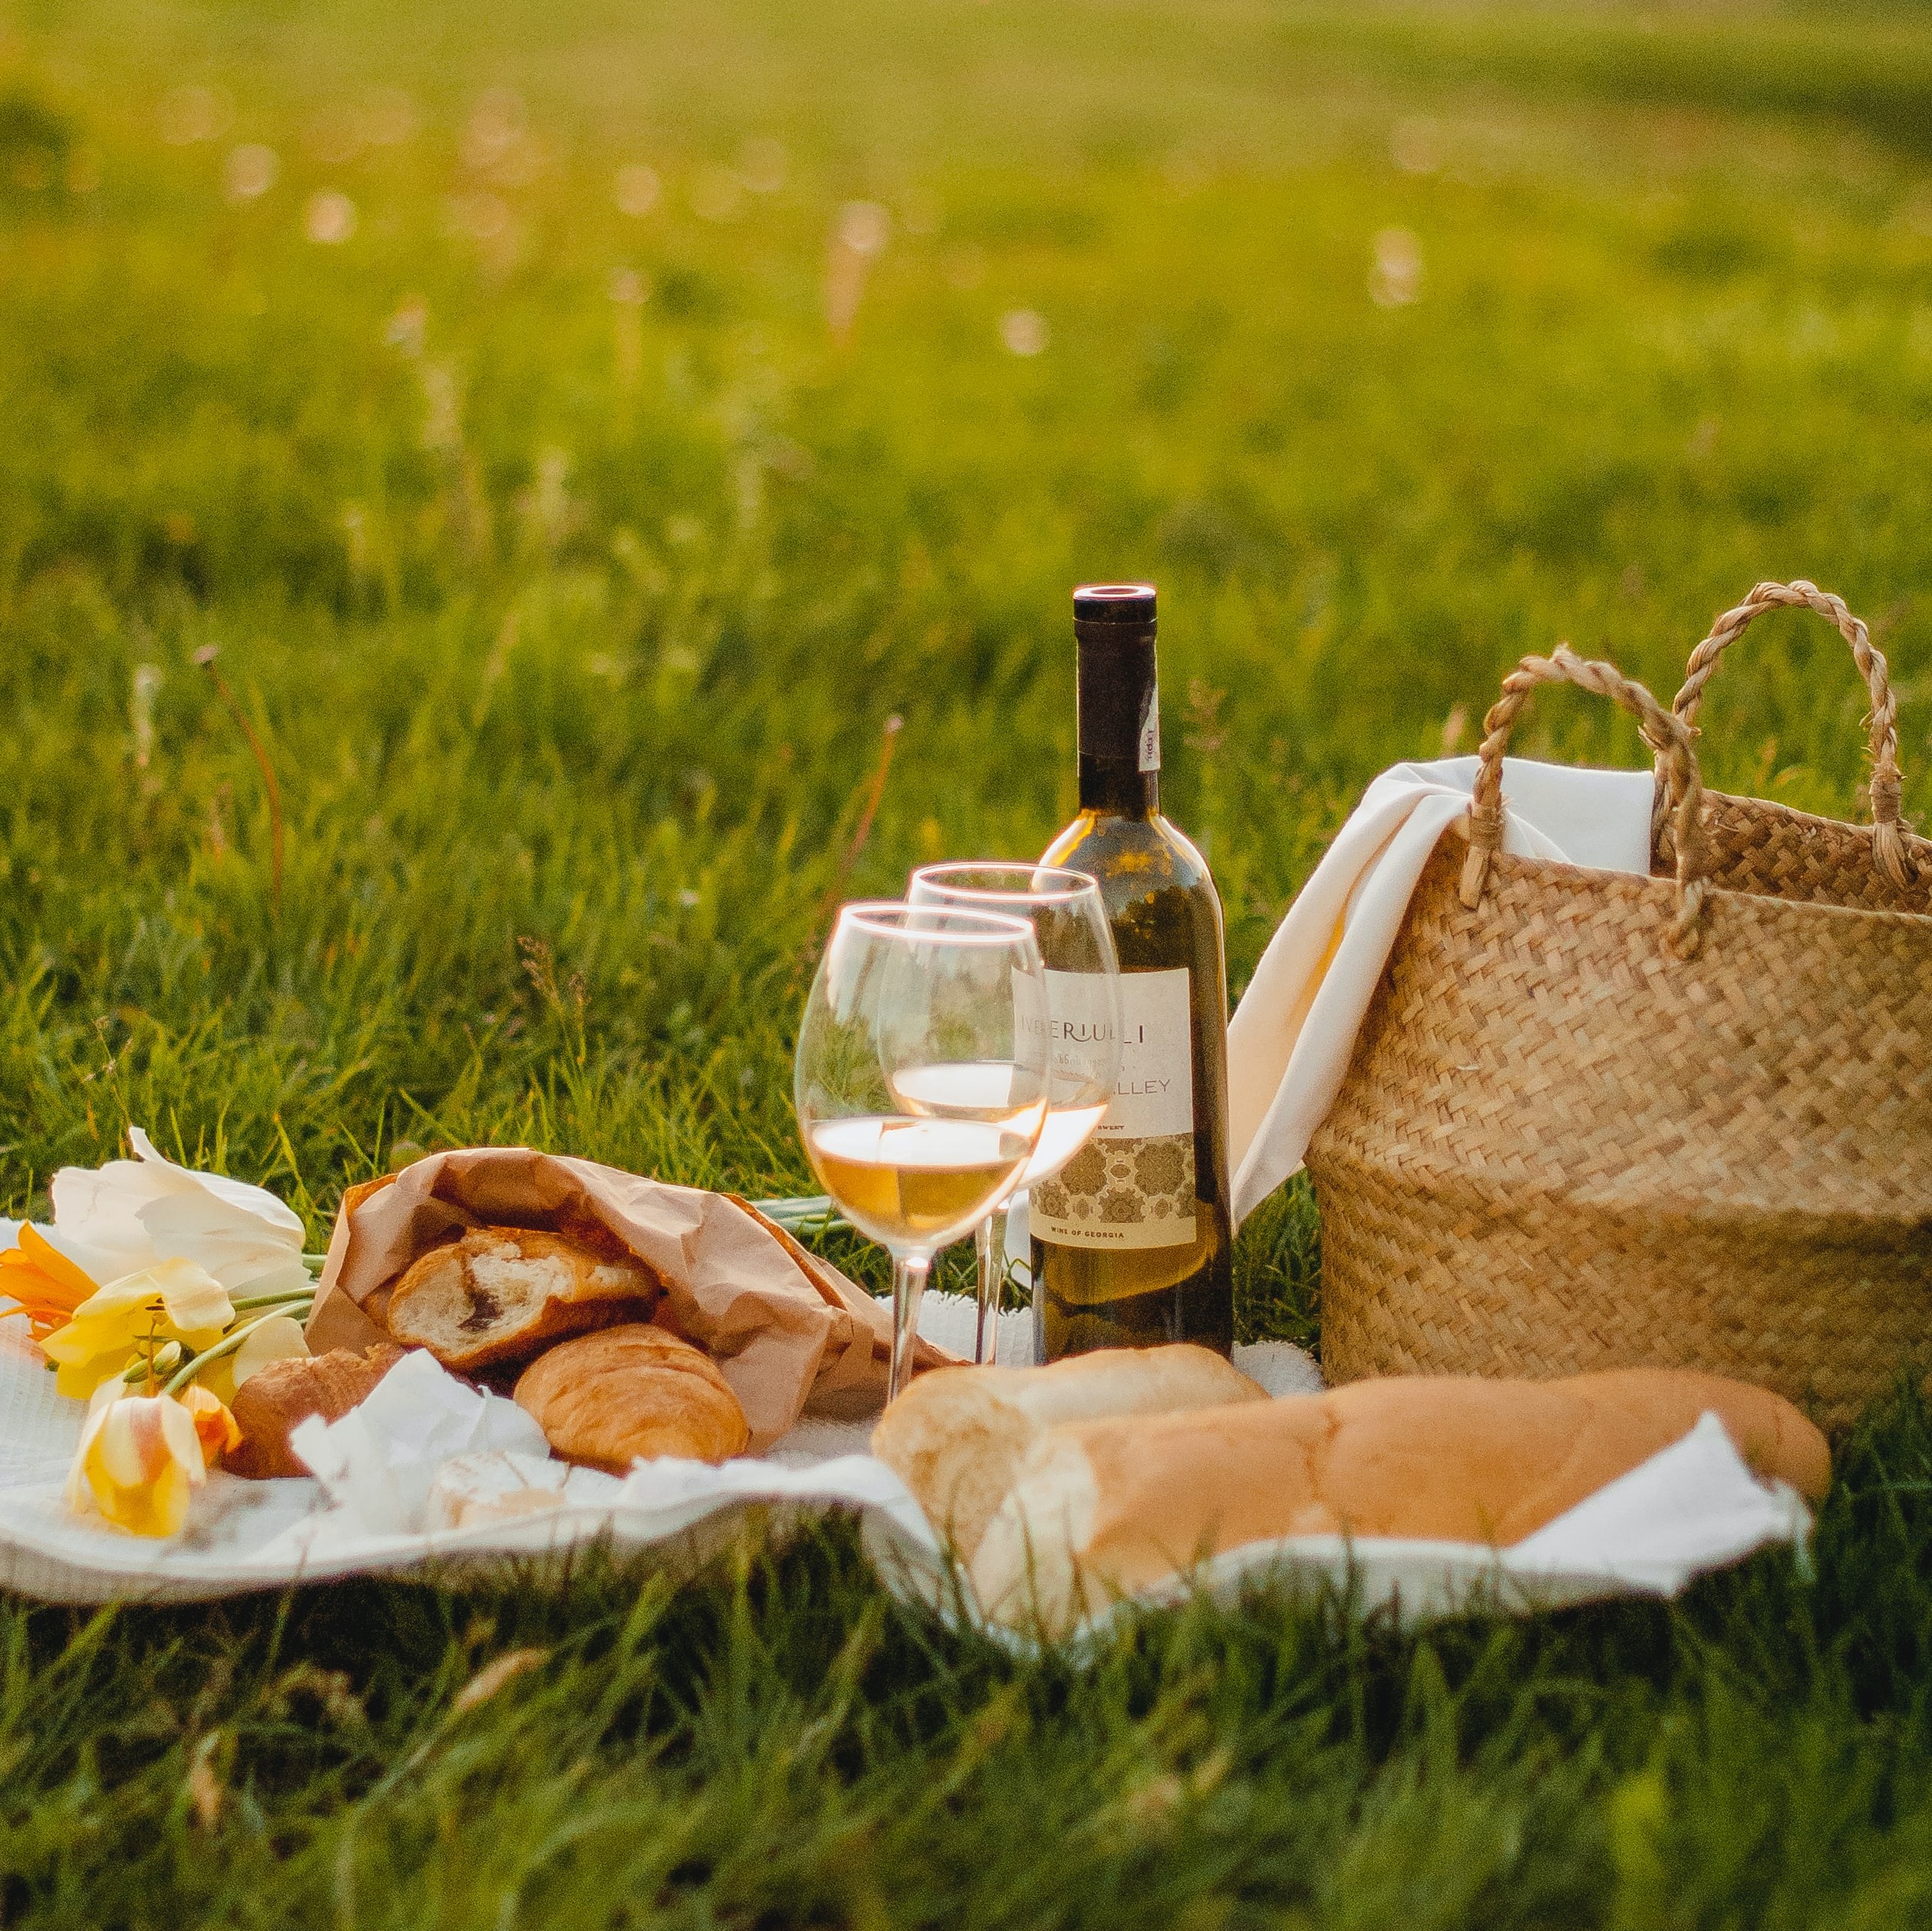 picnic season